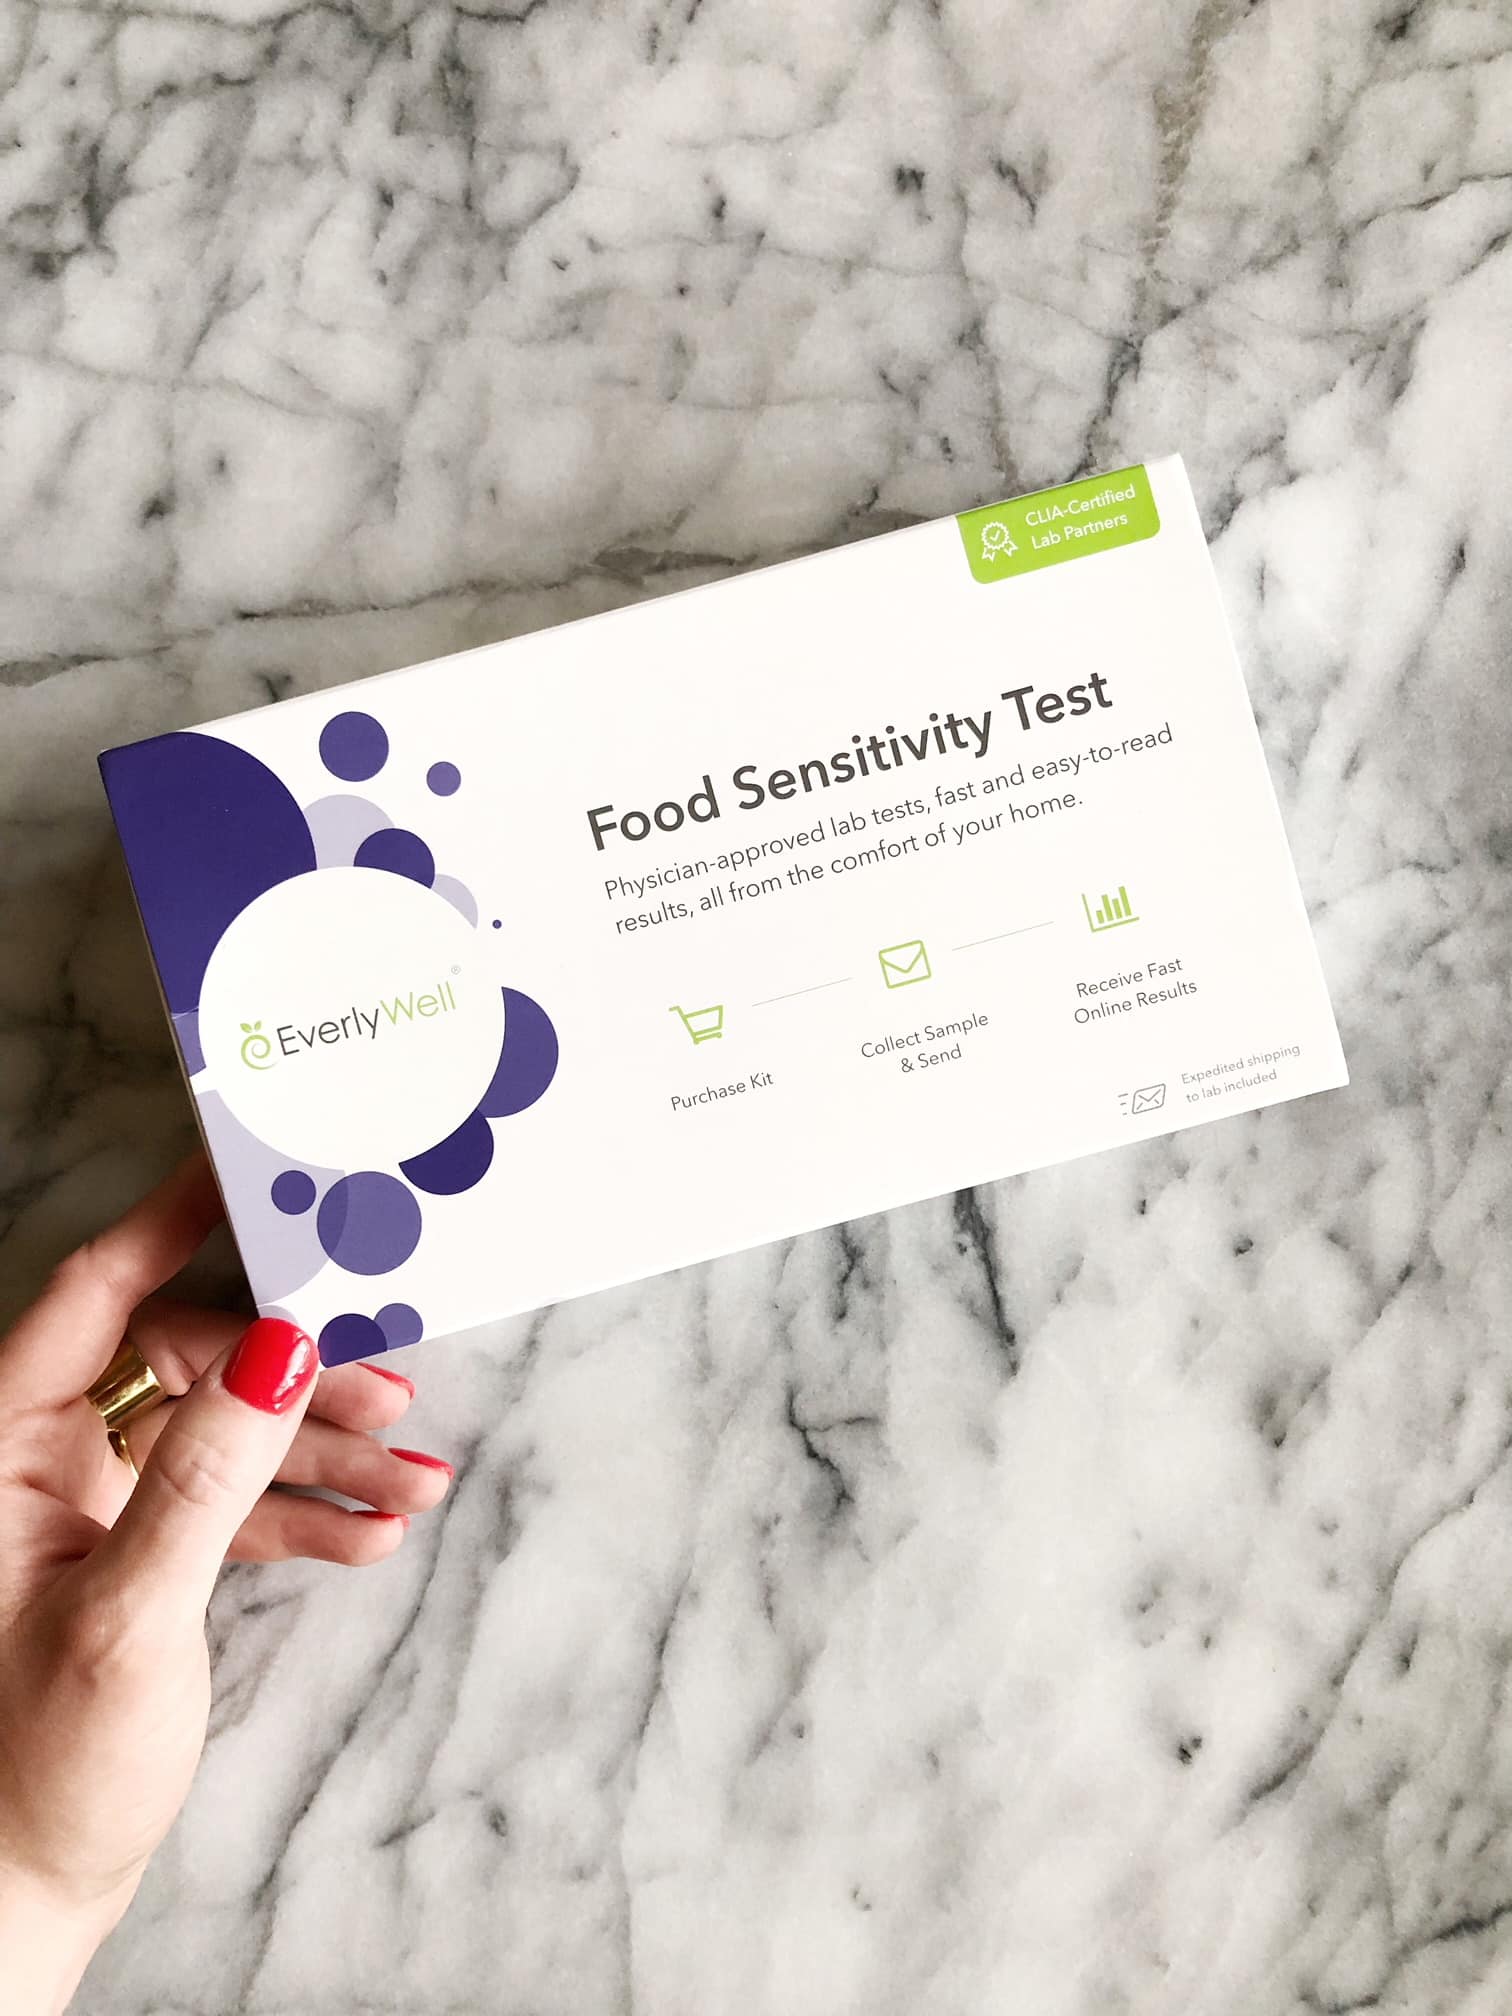 EverlyWell Food Sensitivity Testing